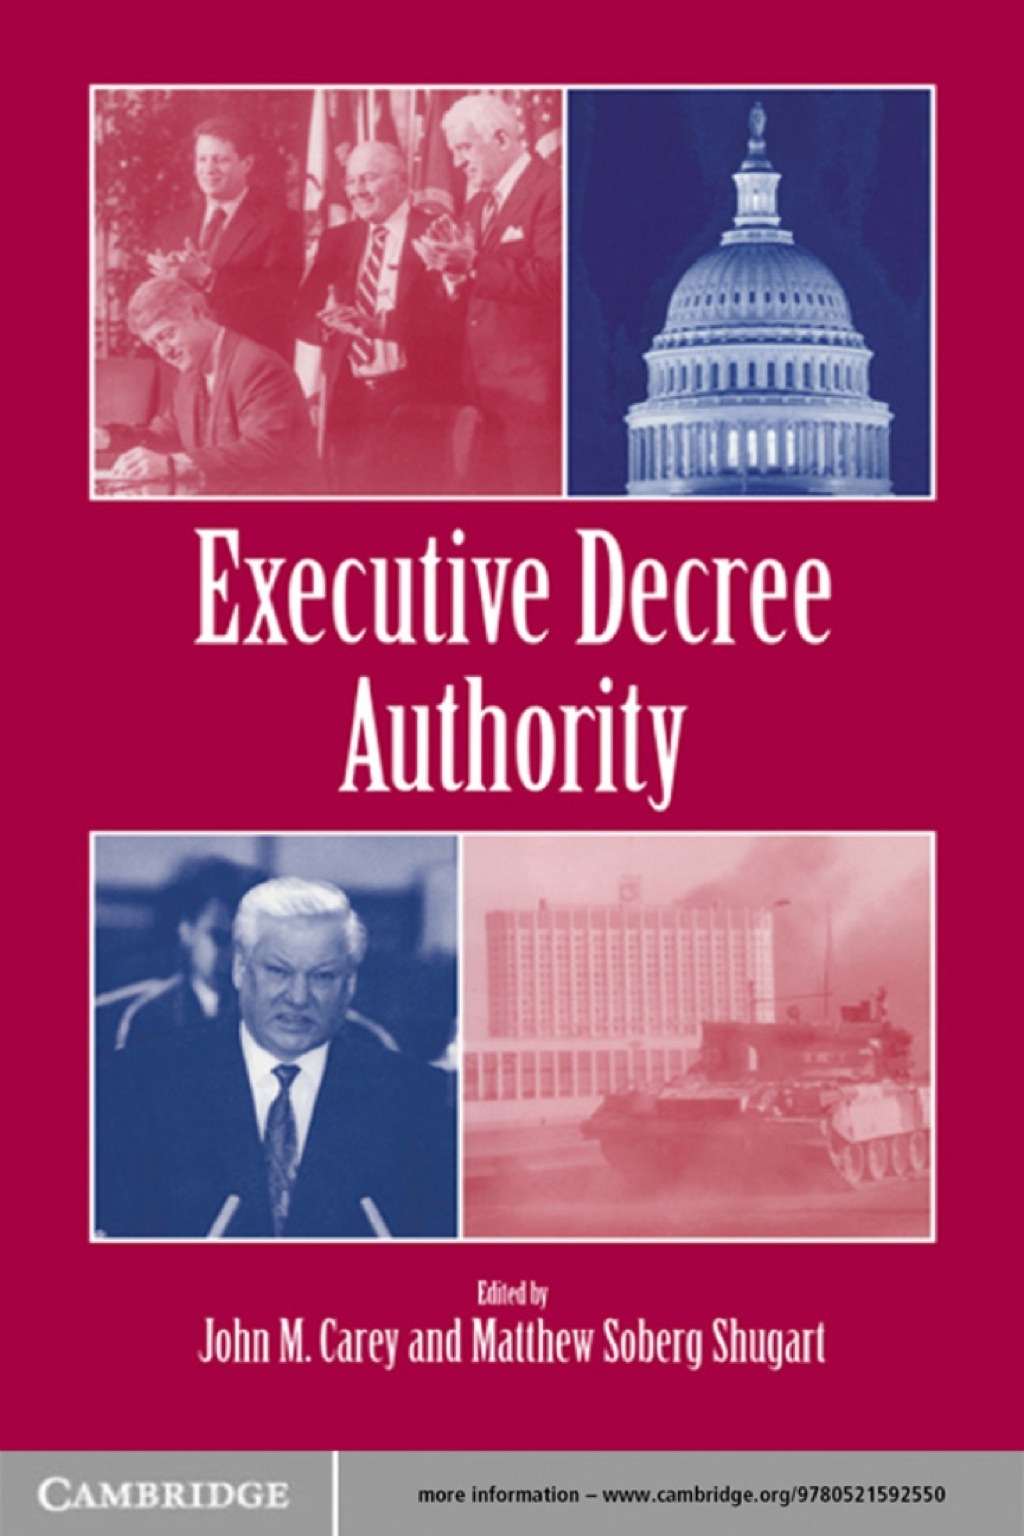 Executive Decree Authority (eBook) - John M. Carey